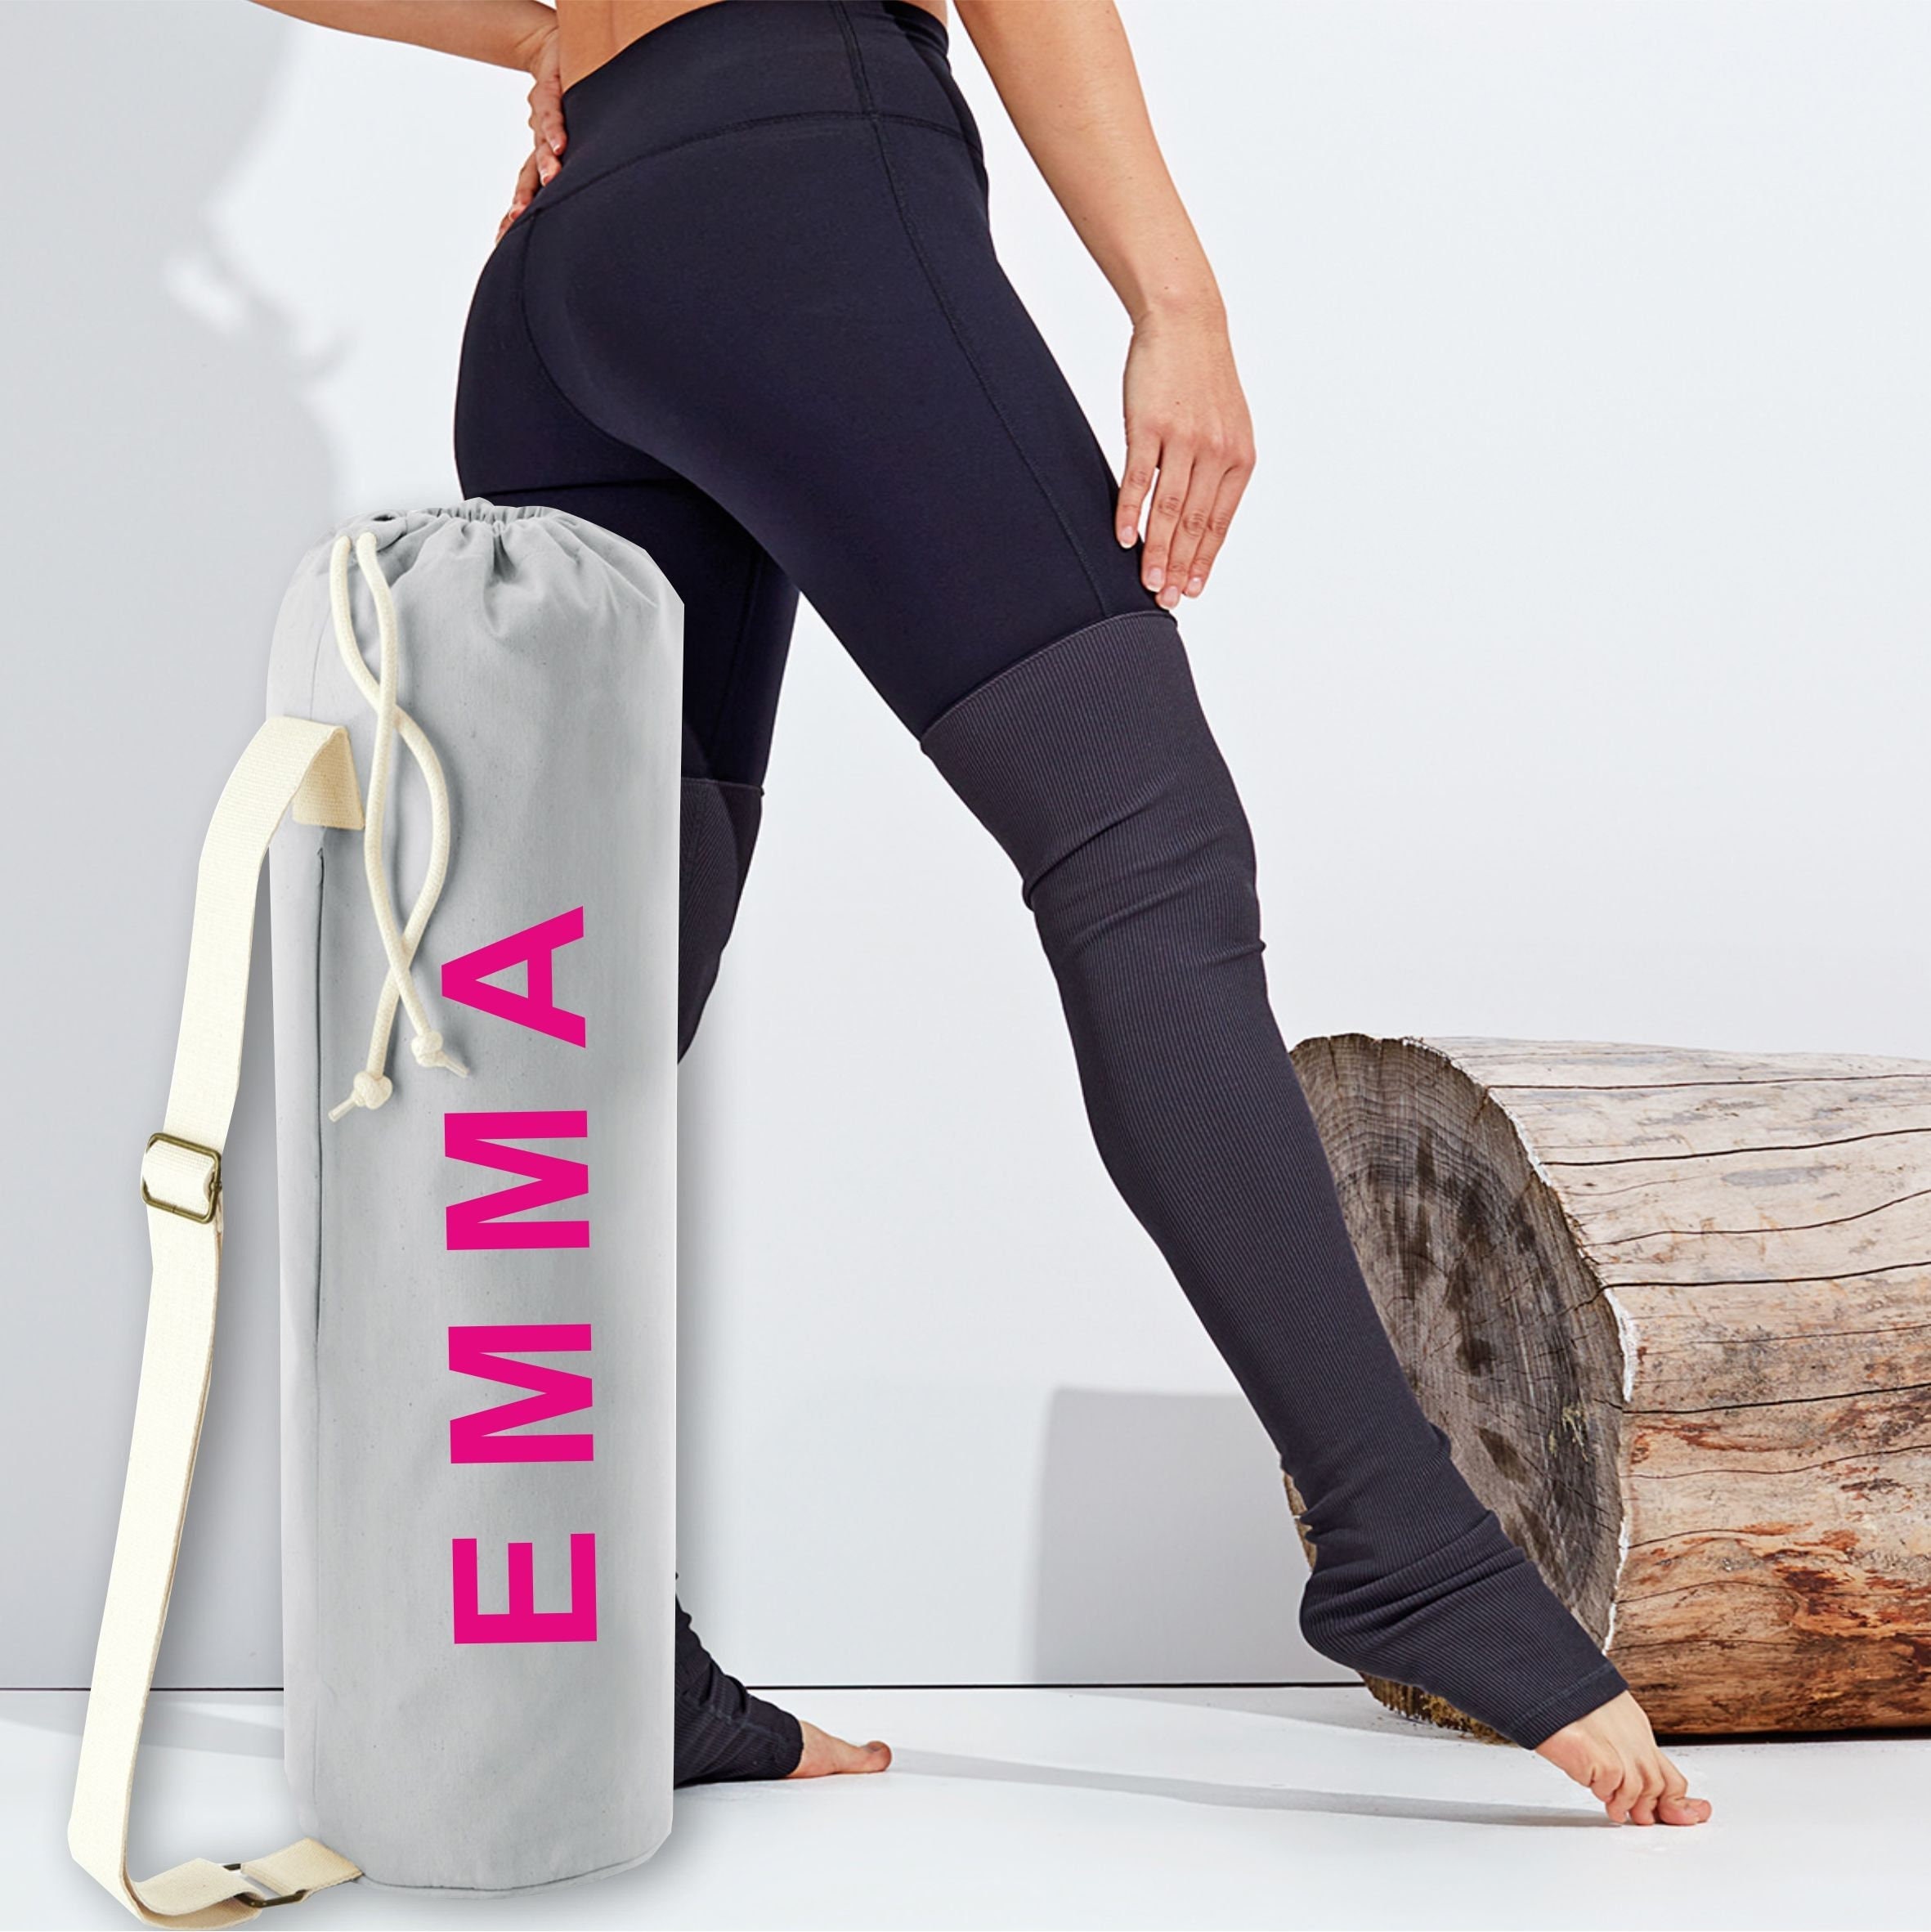 Yoga Mat Bag Printed With Name / Personalised Made From Premium